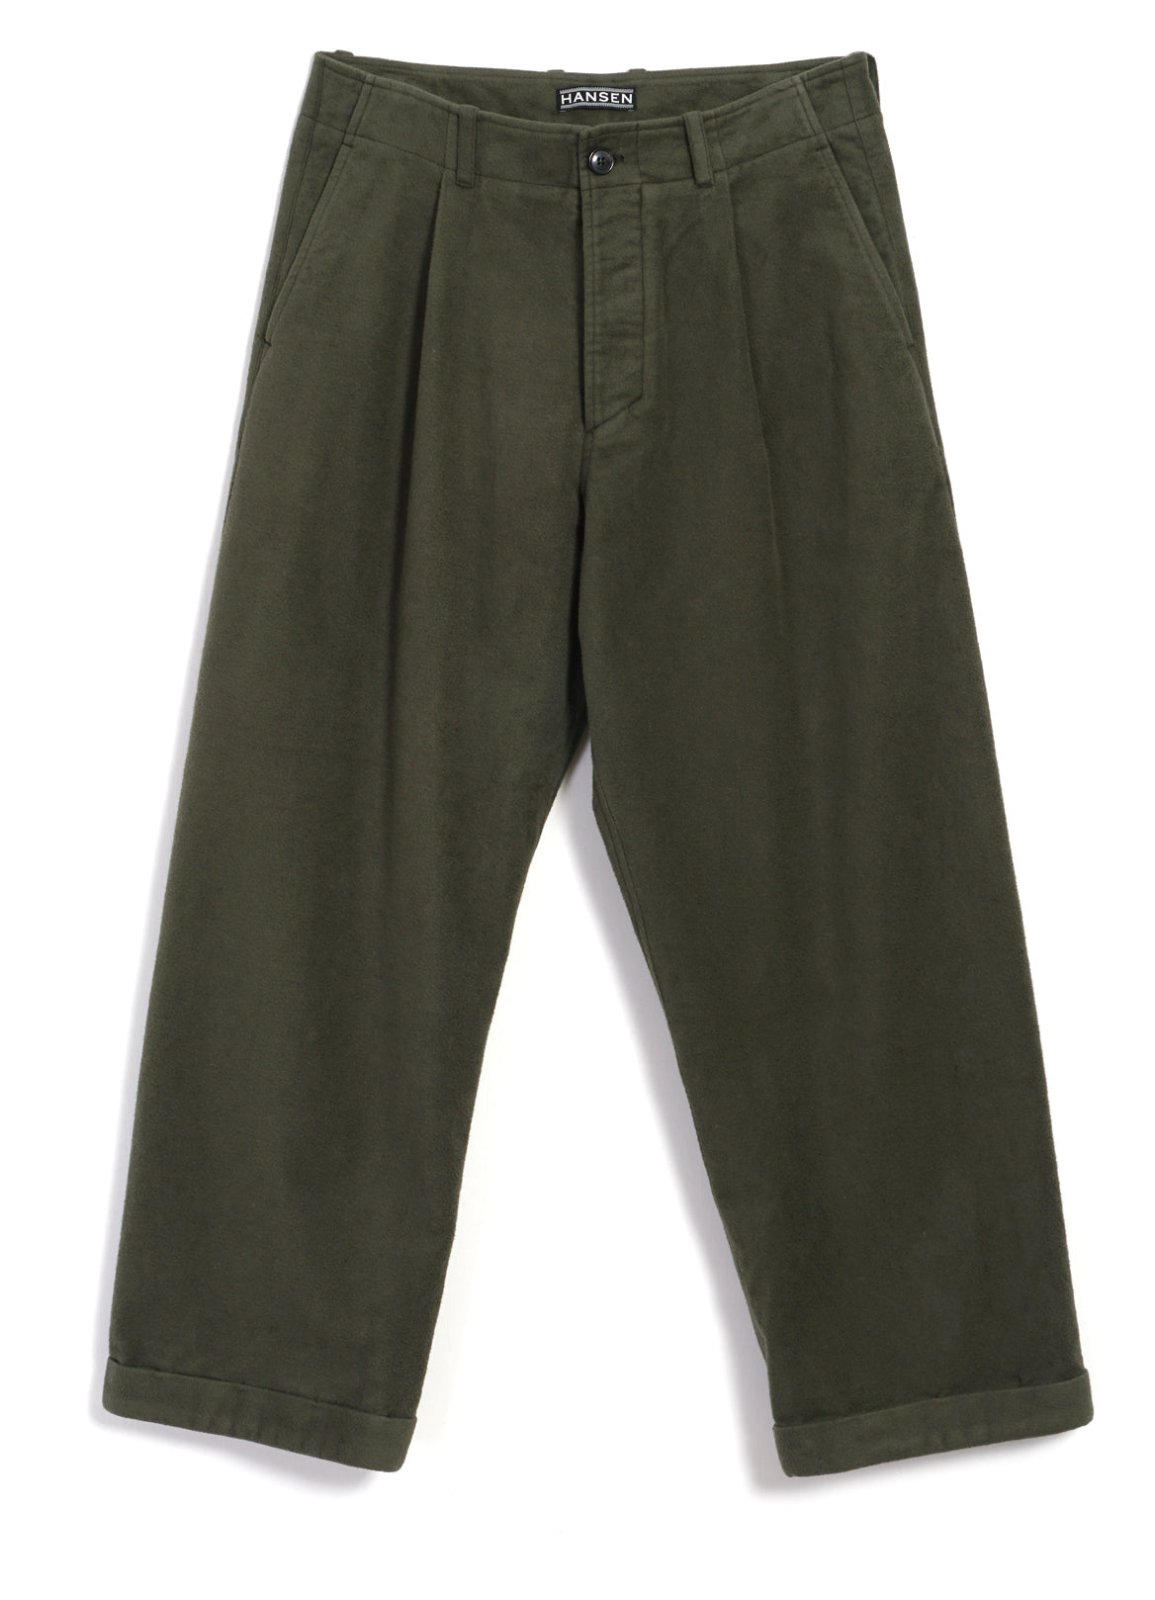 HANSEN GARMENTS - BOBBY | Super Wide Pleated Trousers | Dark Green - HANSEN Garments